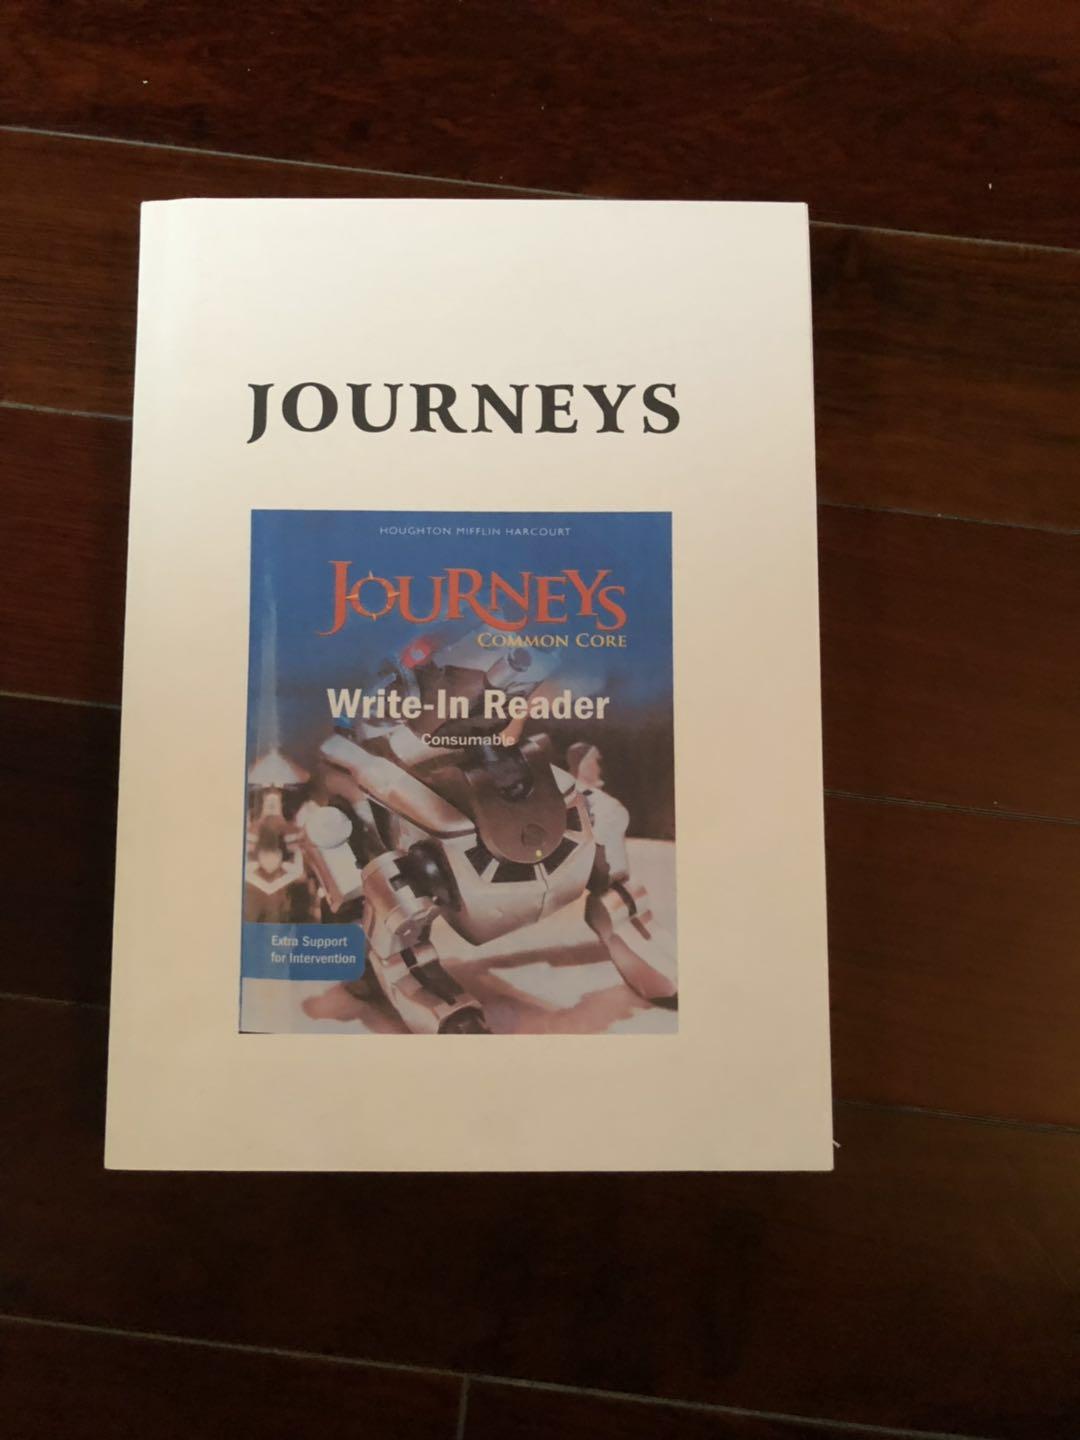 Journeys common core Write-in Reader